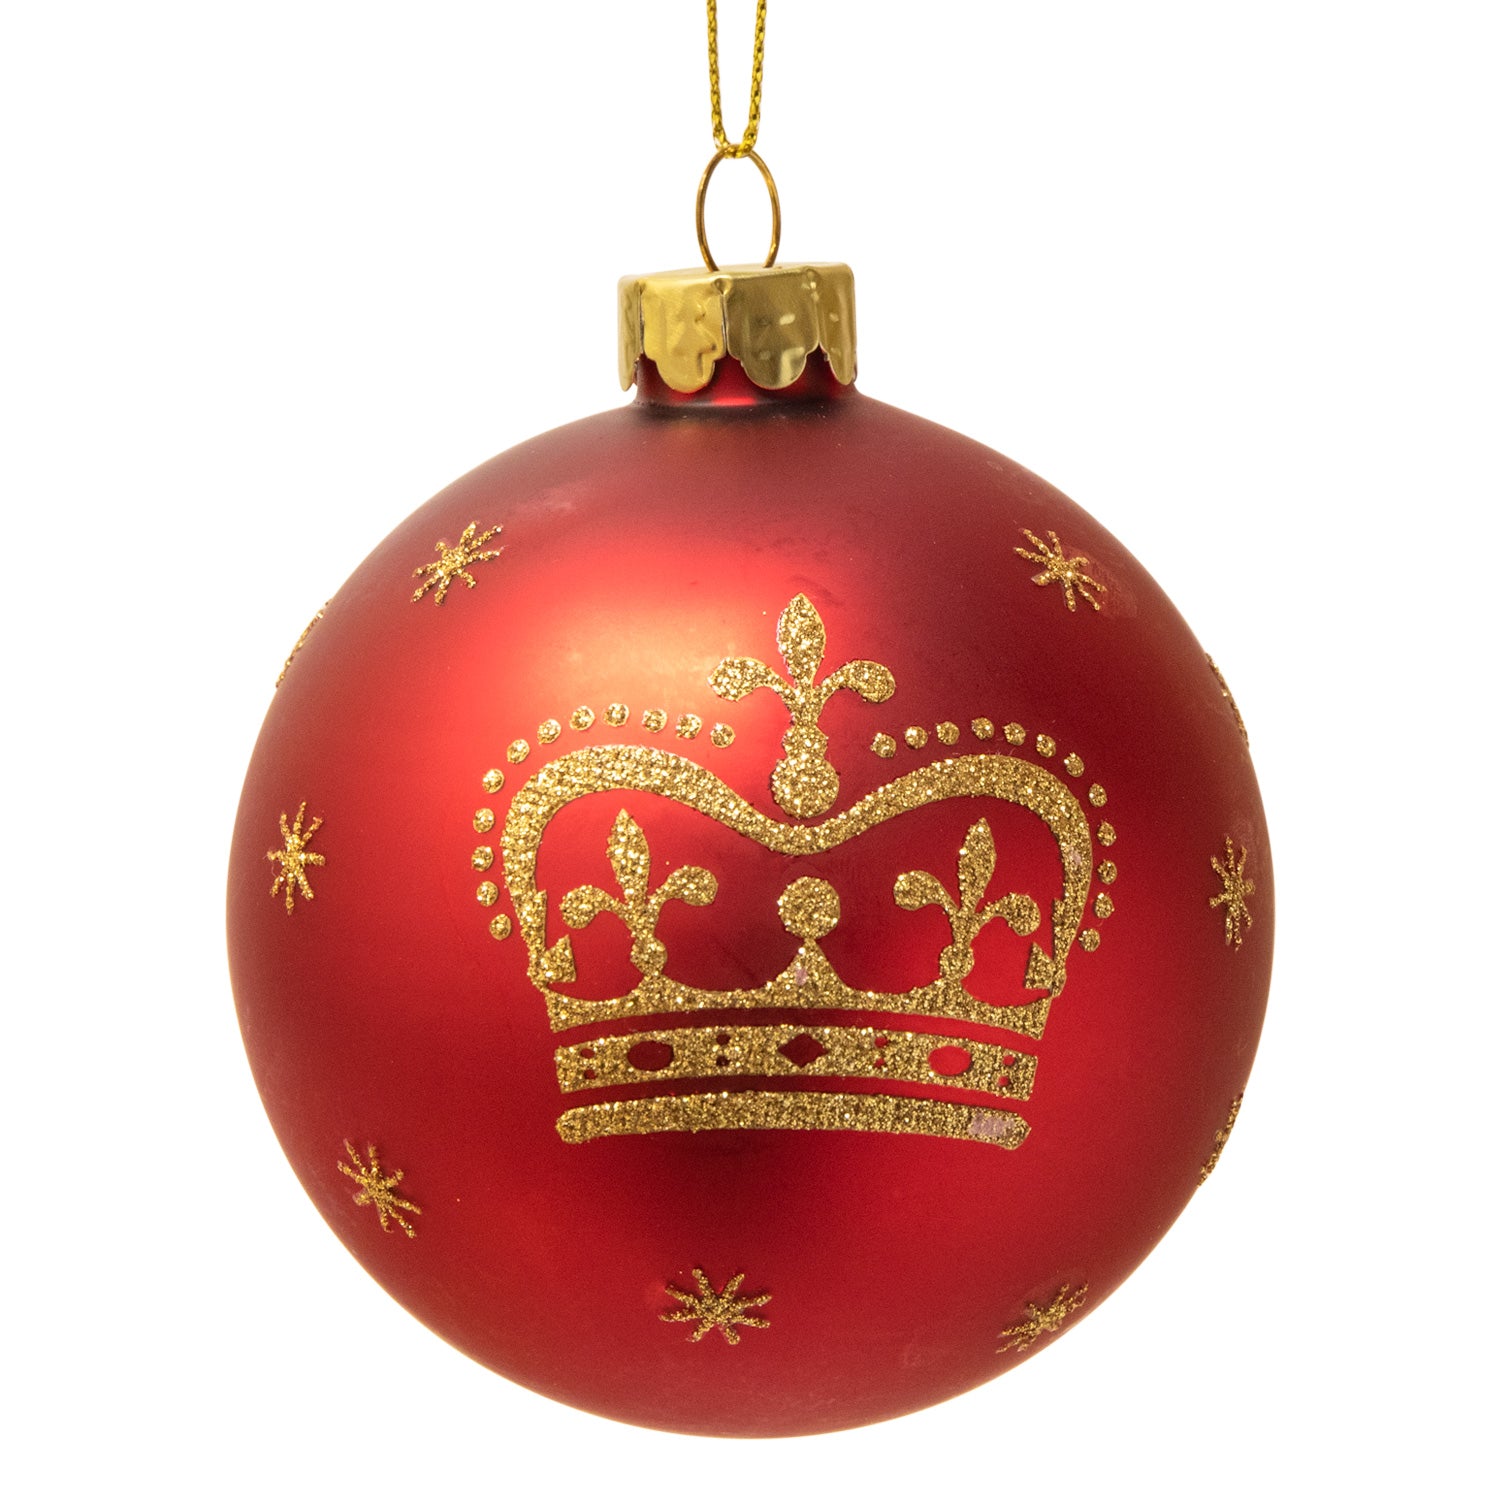 Gisela Graham King Charles III Royal Bauble Christmas Decoration - Red/Gold 2